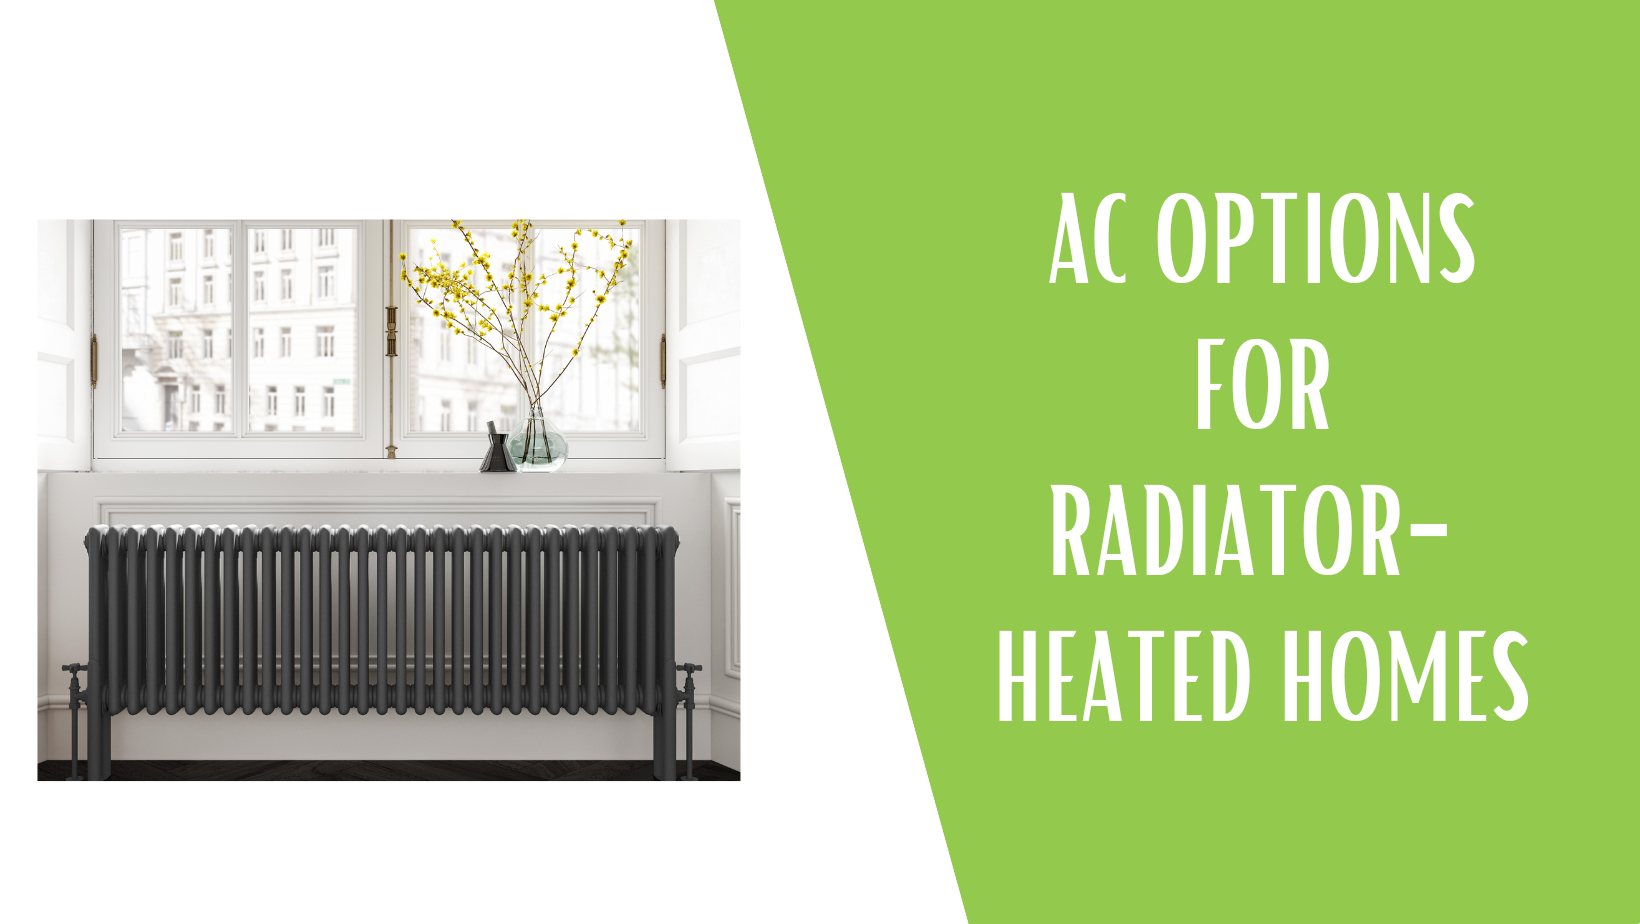 AC Options for Radiator Heated Home